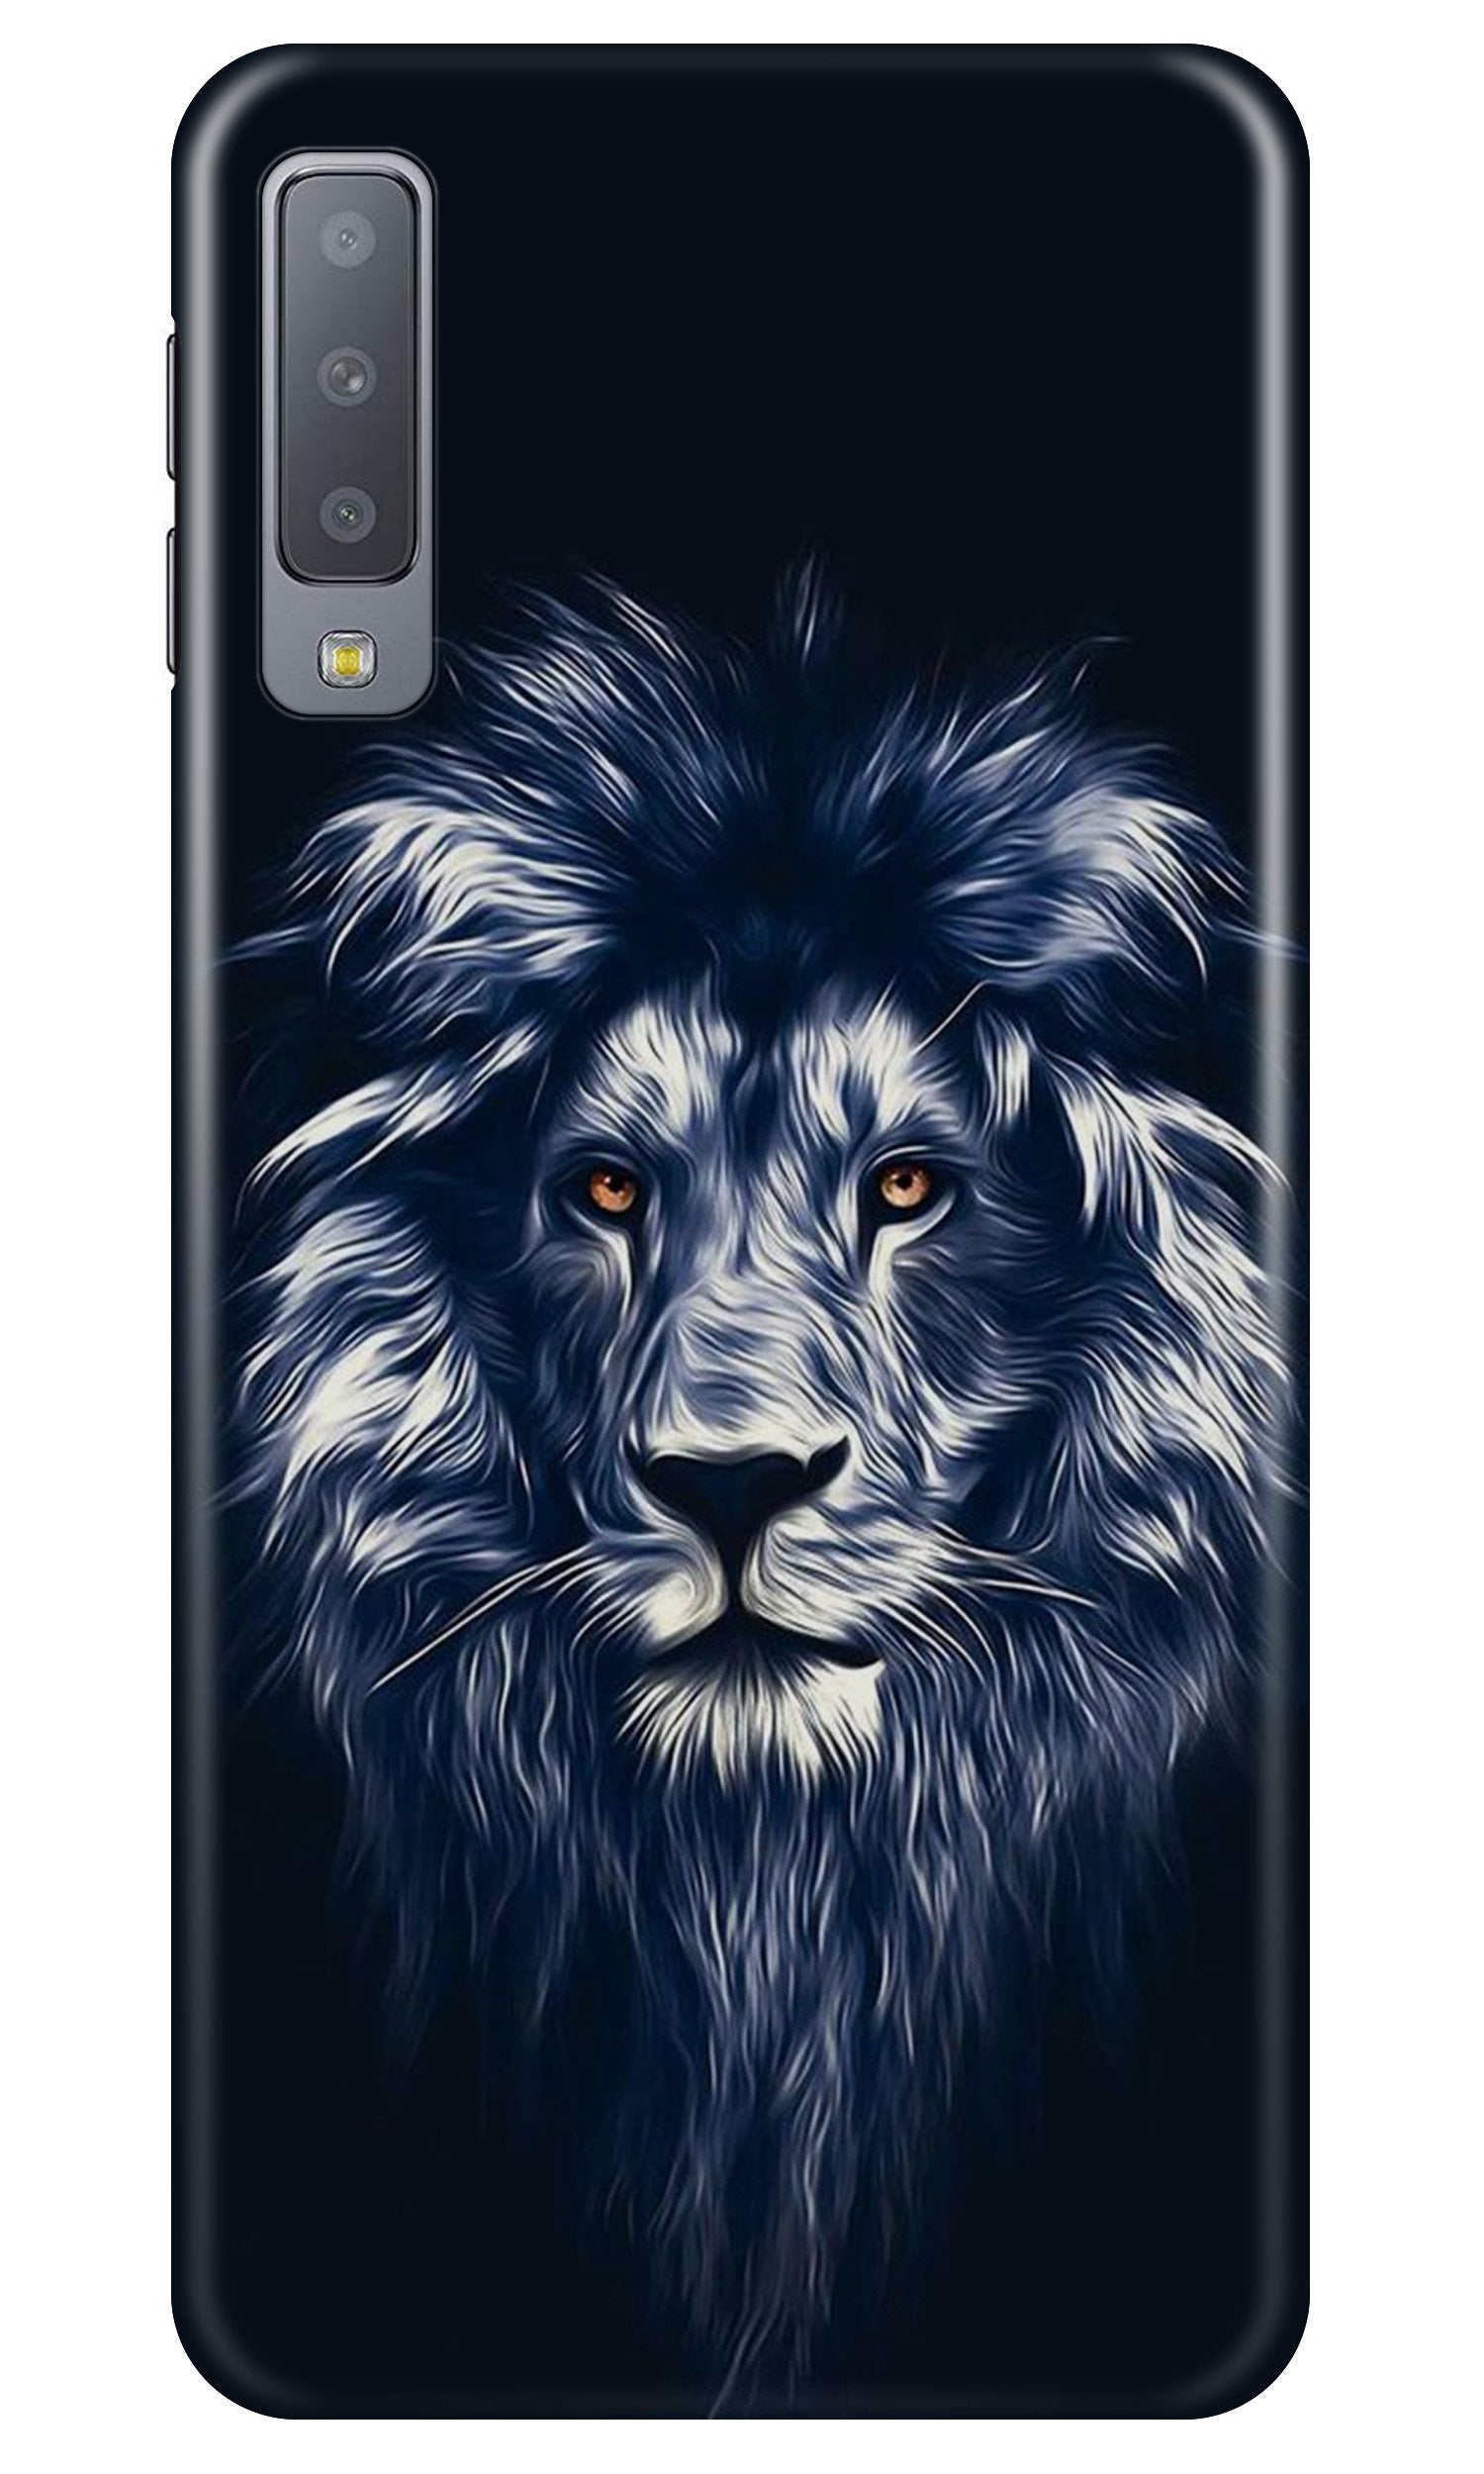 Lion Case for Samung Galaxy A70s (Design No. 281)